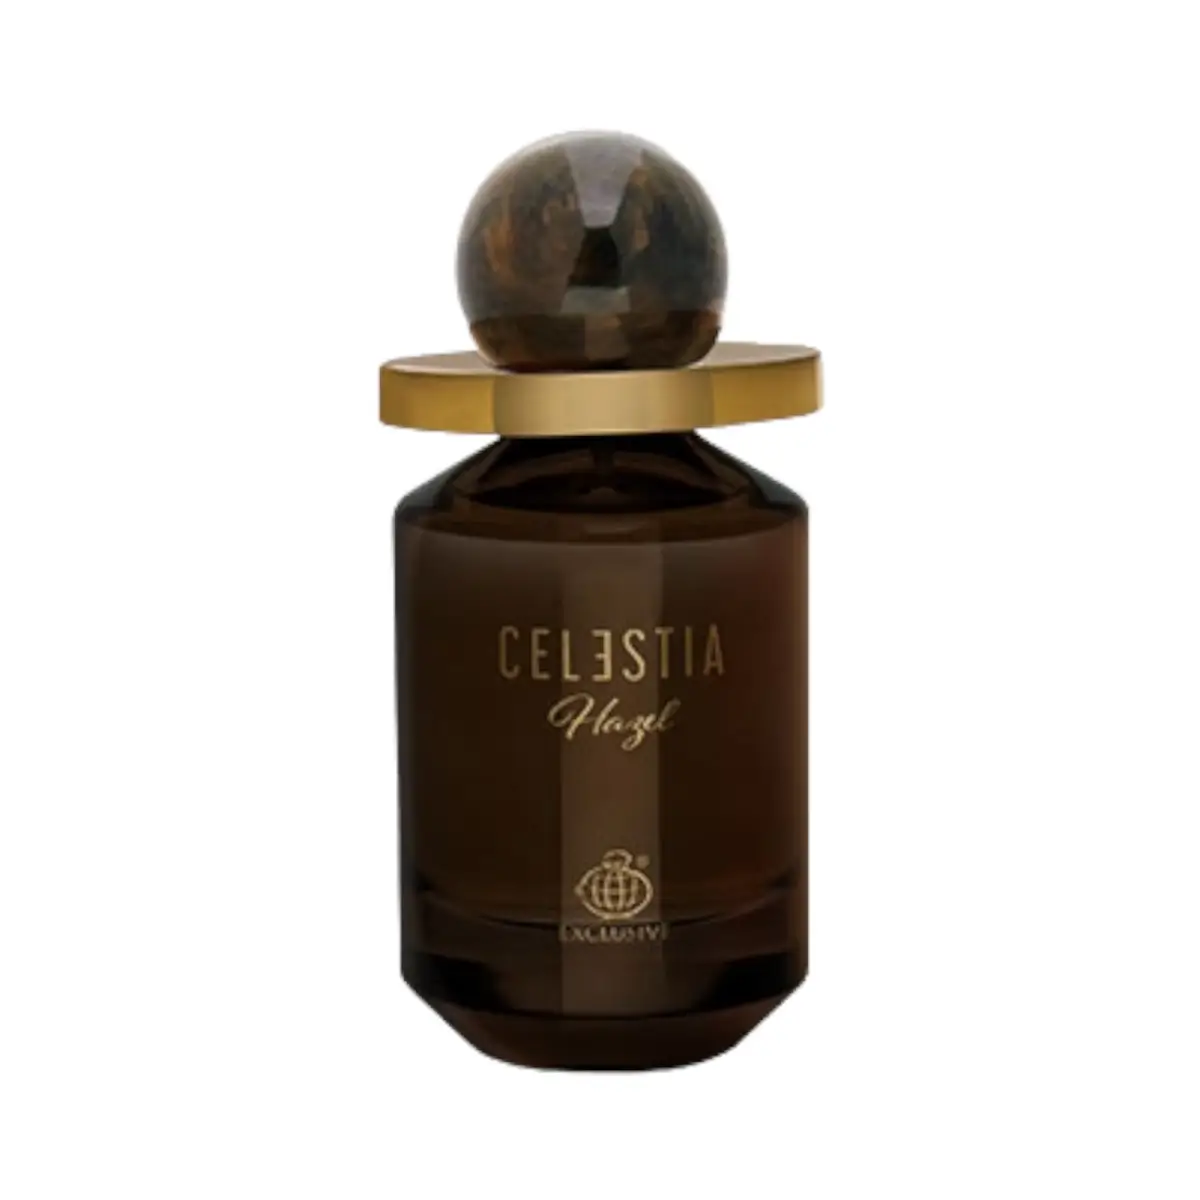 Parfum Celestia Hazel, Fragrance World, apa de parfum 80 ml, unisex - inspirat din Tobacco Absolute by Molton Brown